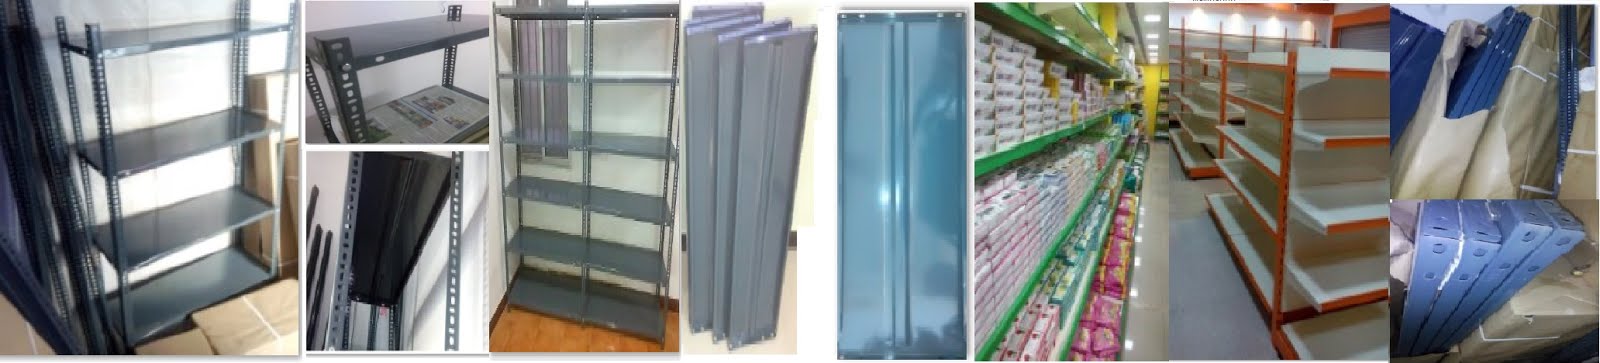 Display racks| Book store racks|Double side racks|supermarket racks|slotted angle rack